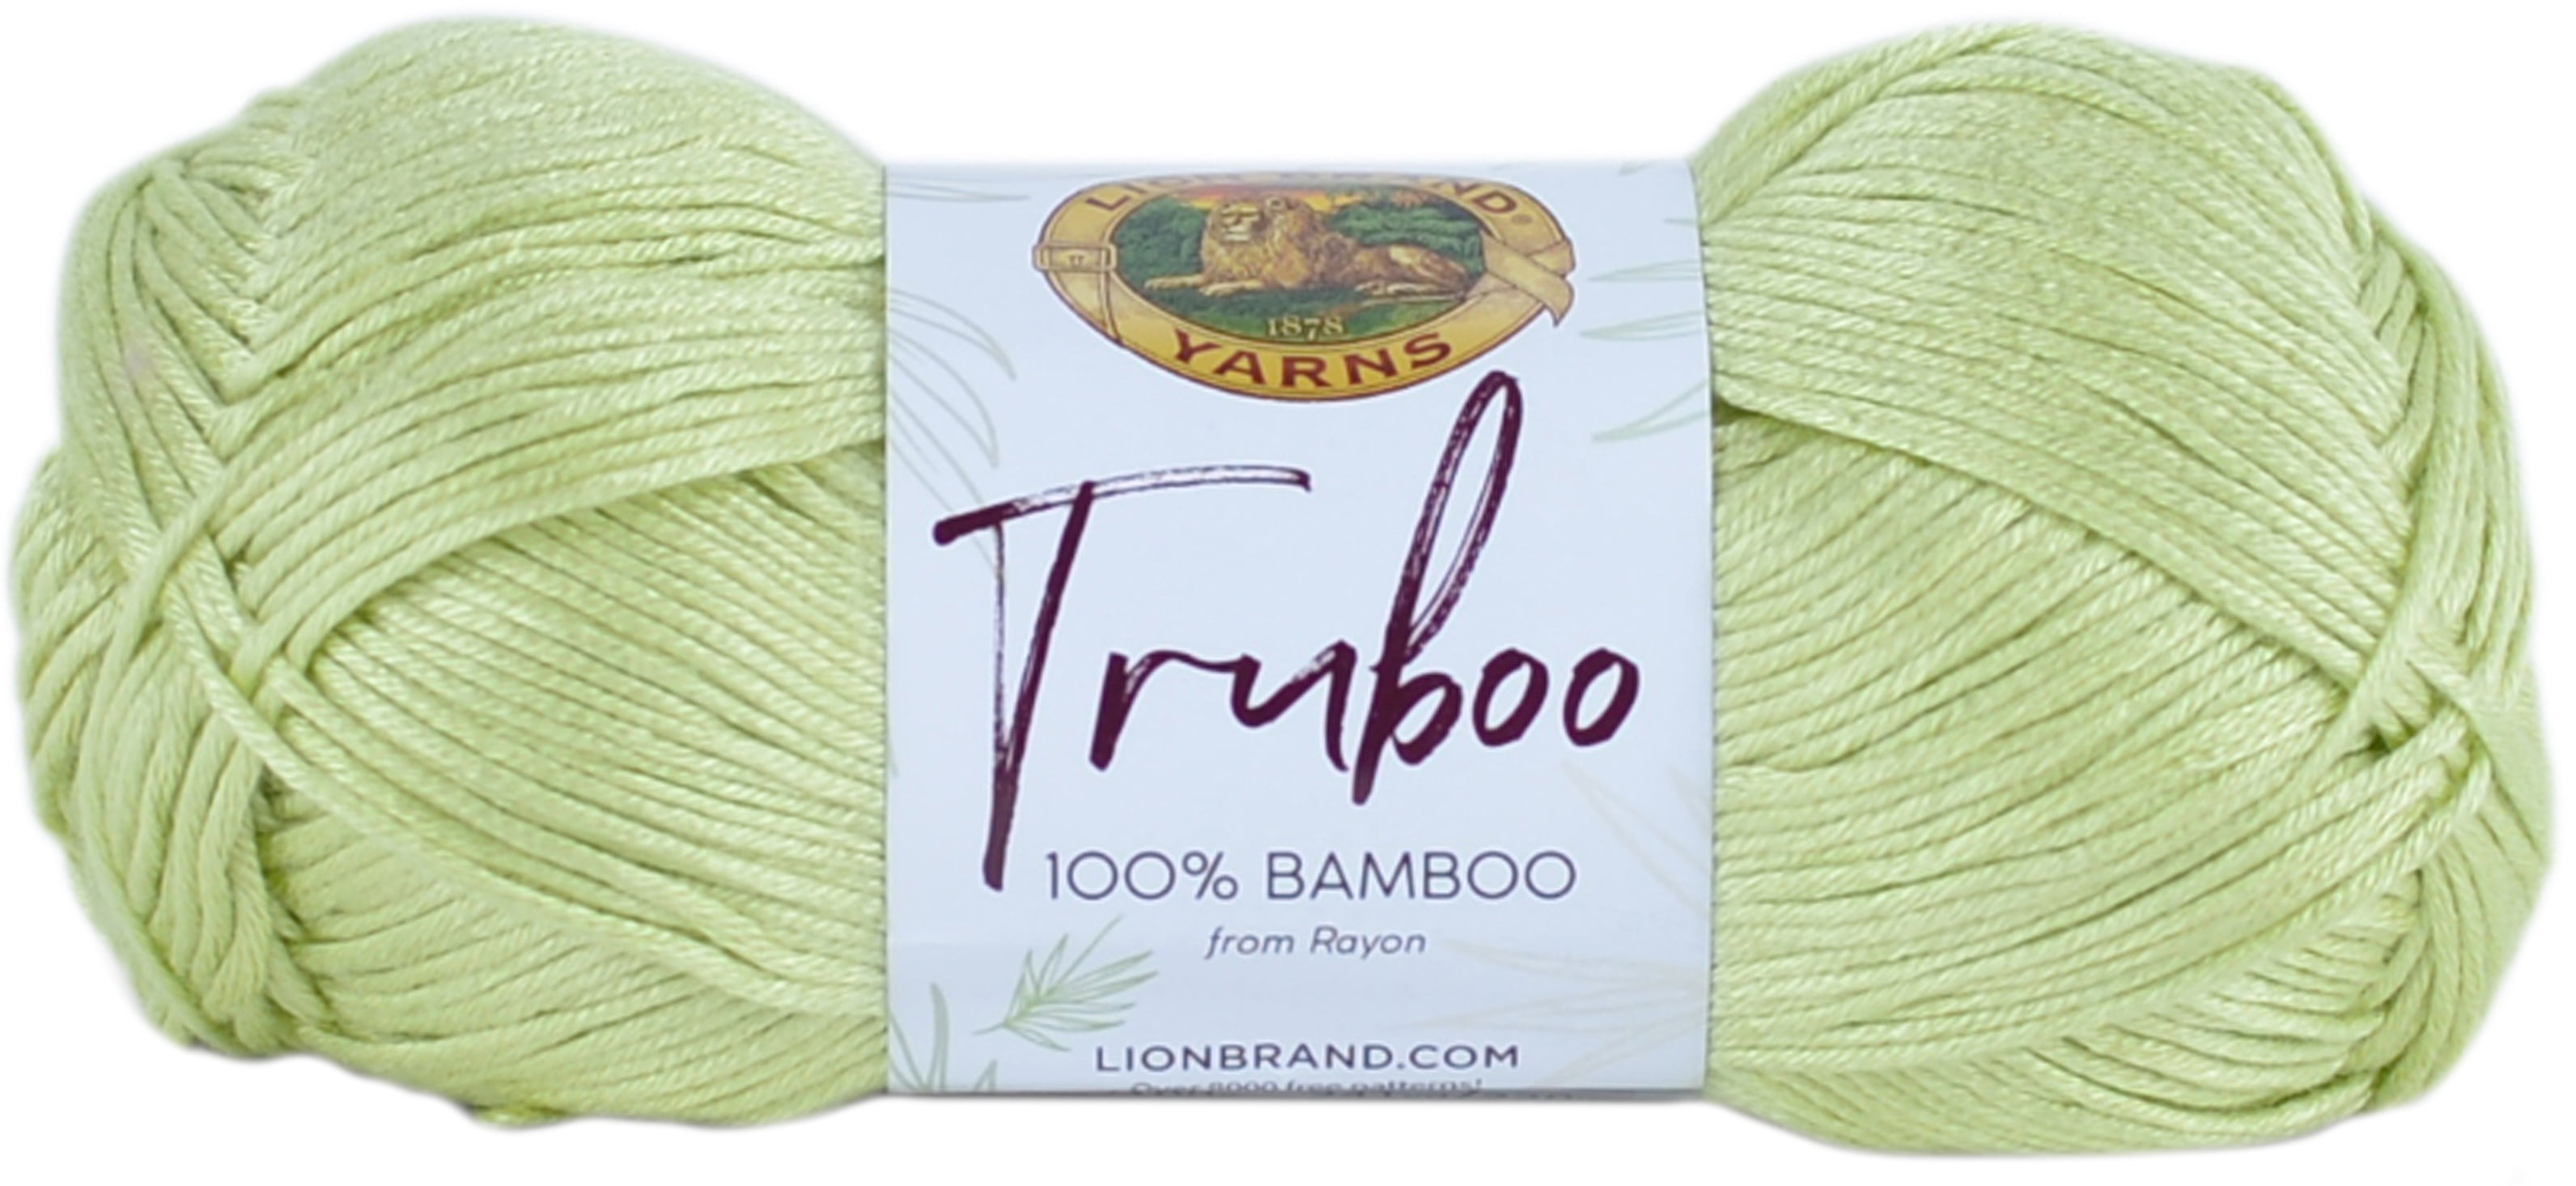 Lion Brand 'LB 1878' 17.6-oz Plum Wool Yarn - Bed Bath & Beyond - 4685494